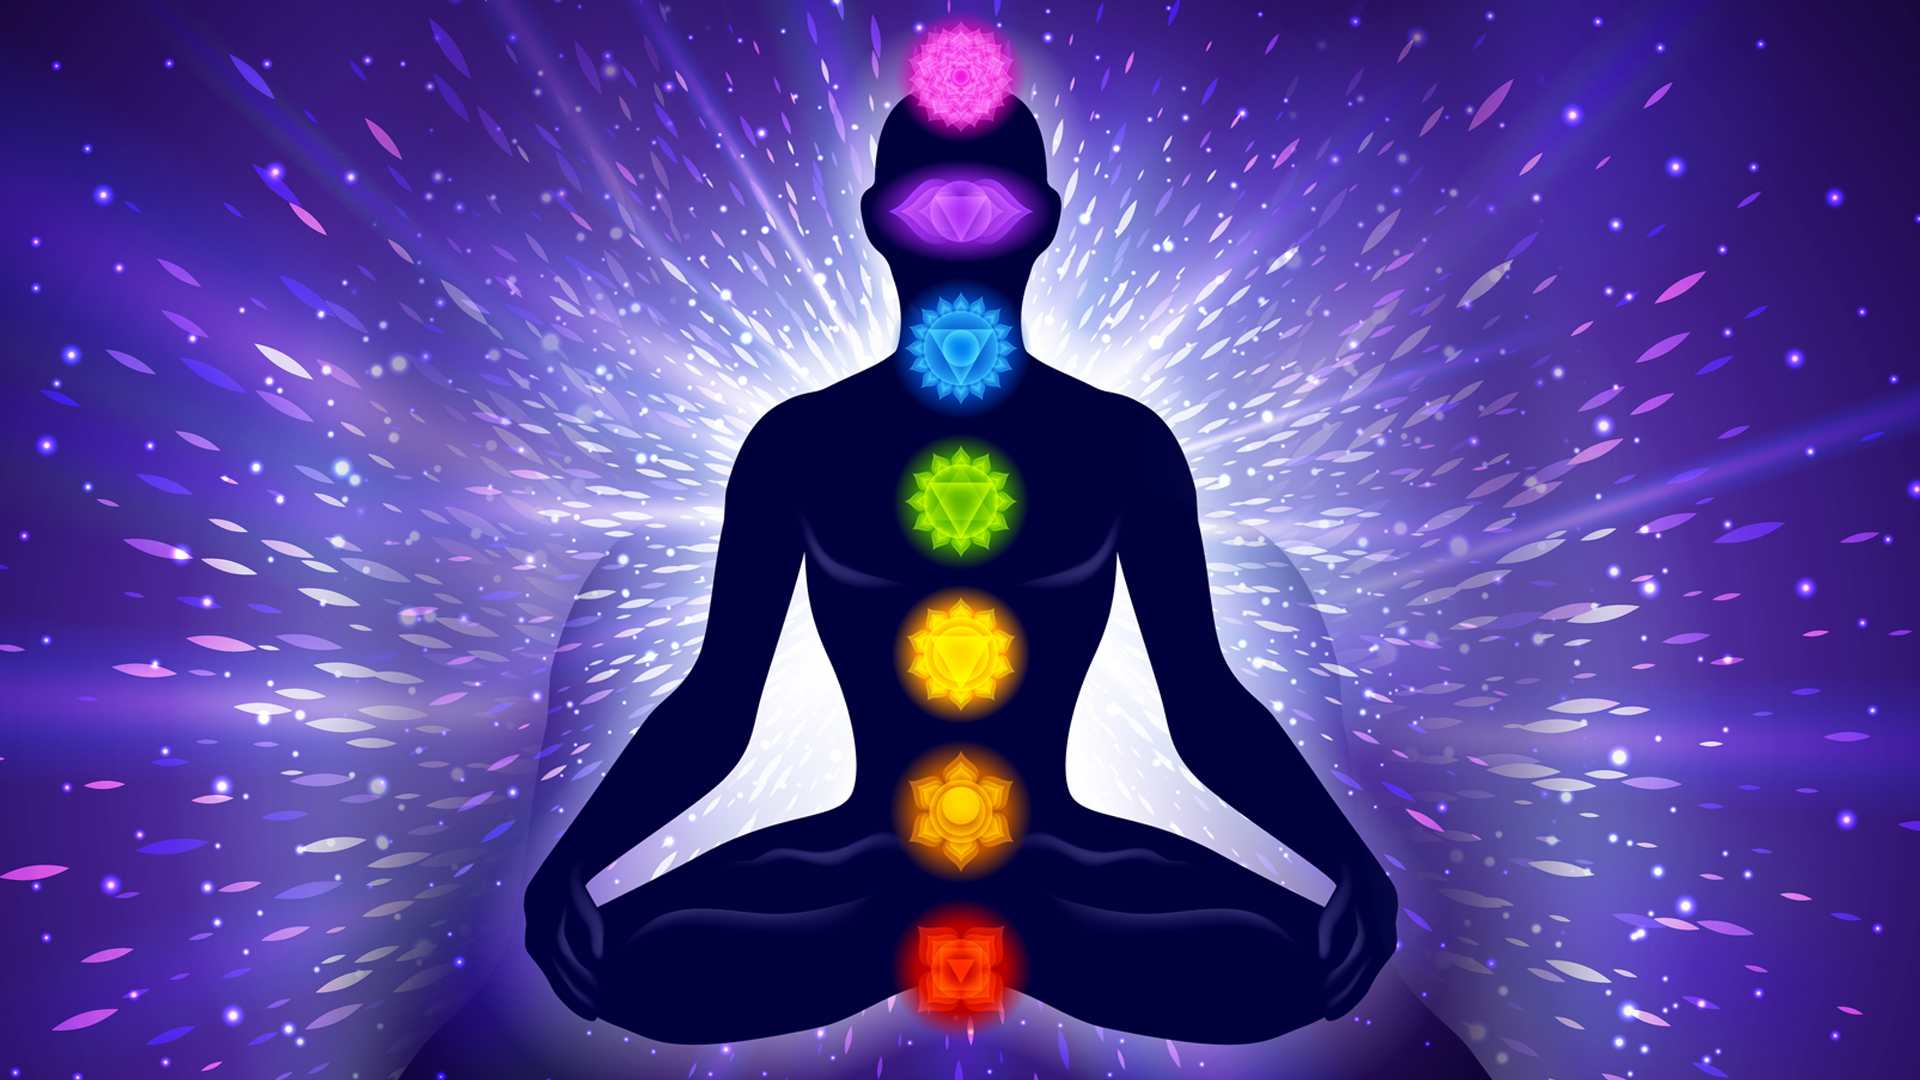 Сканворд медитация. Чакра Анахата энергия 7. Аура 1 чакры. Медитация чакры. Рейки медитация.